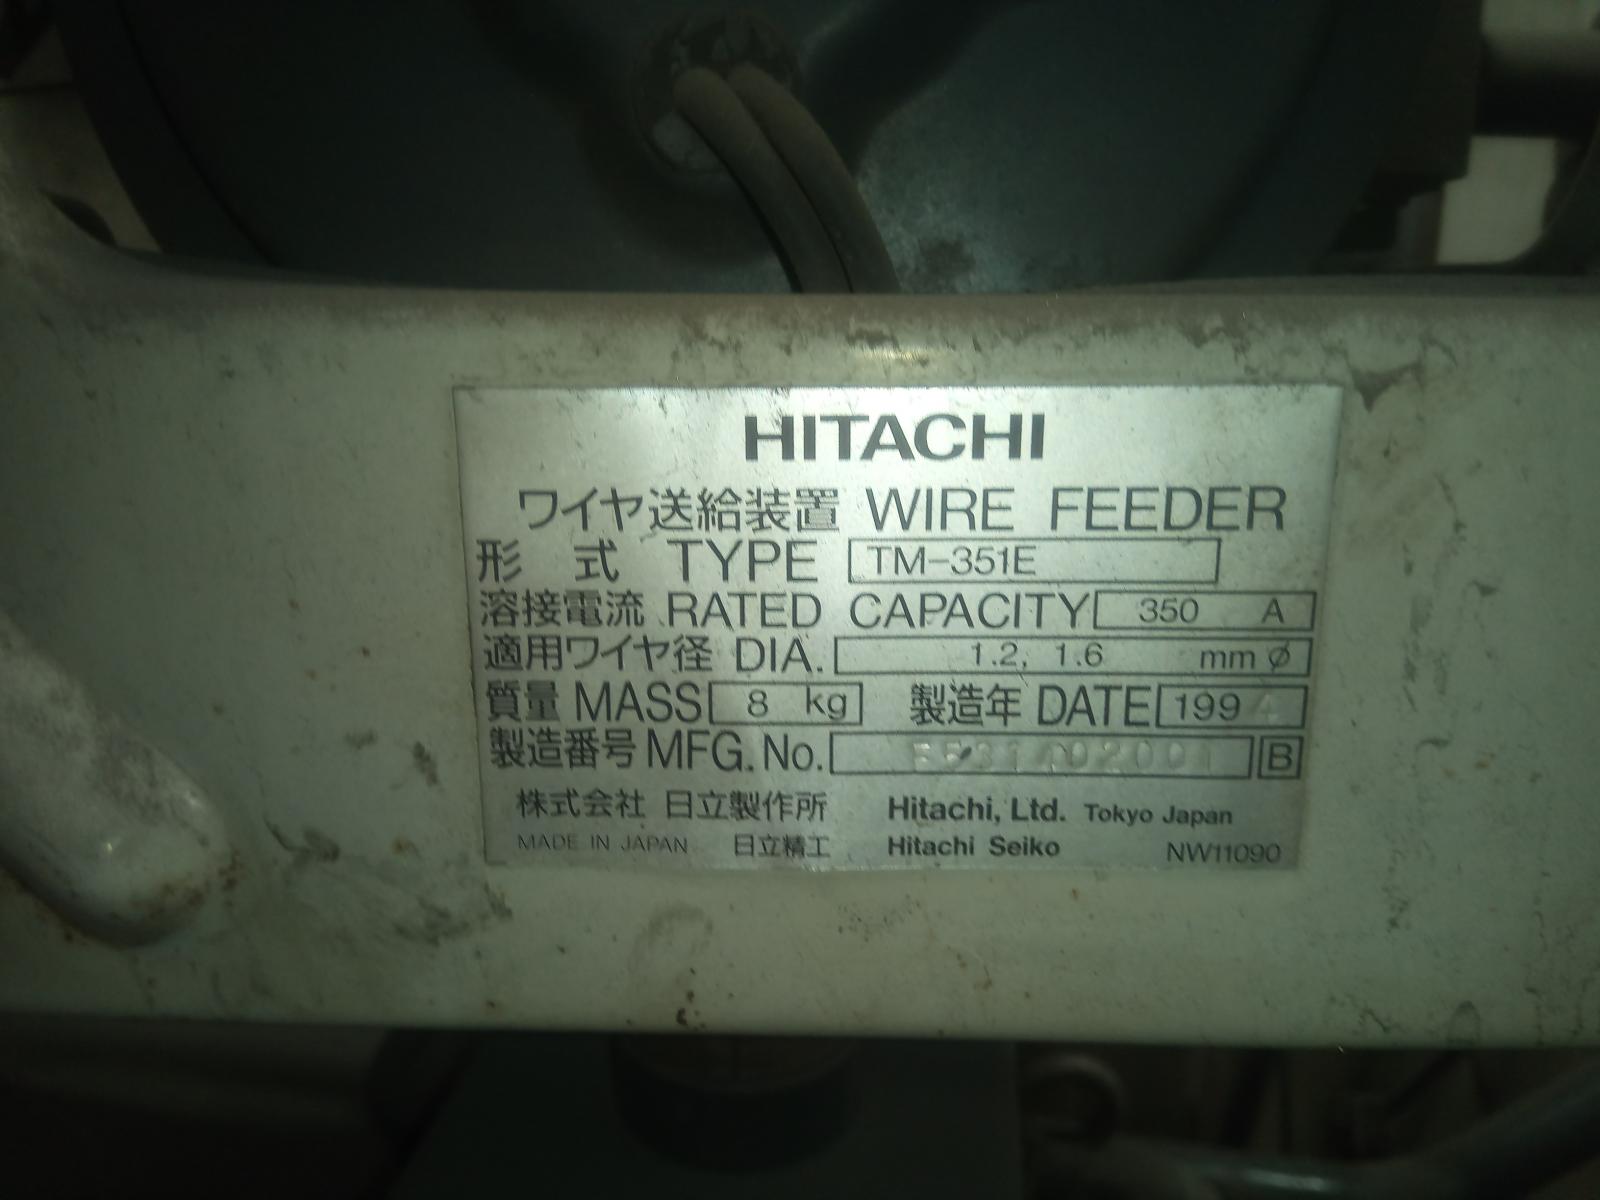 Robot Hitachi M5030